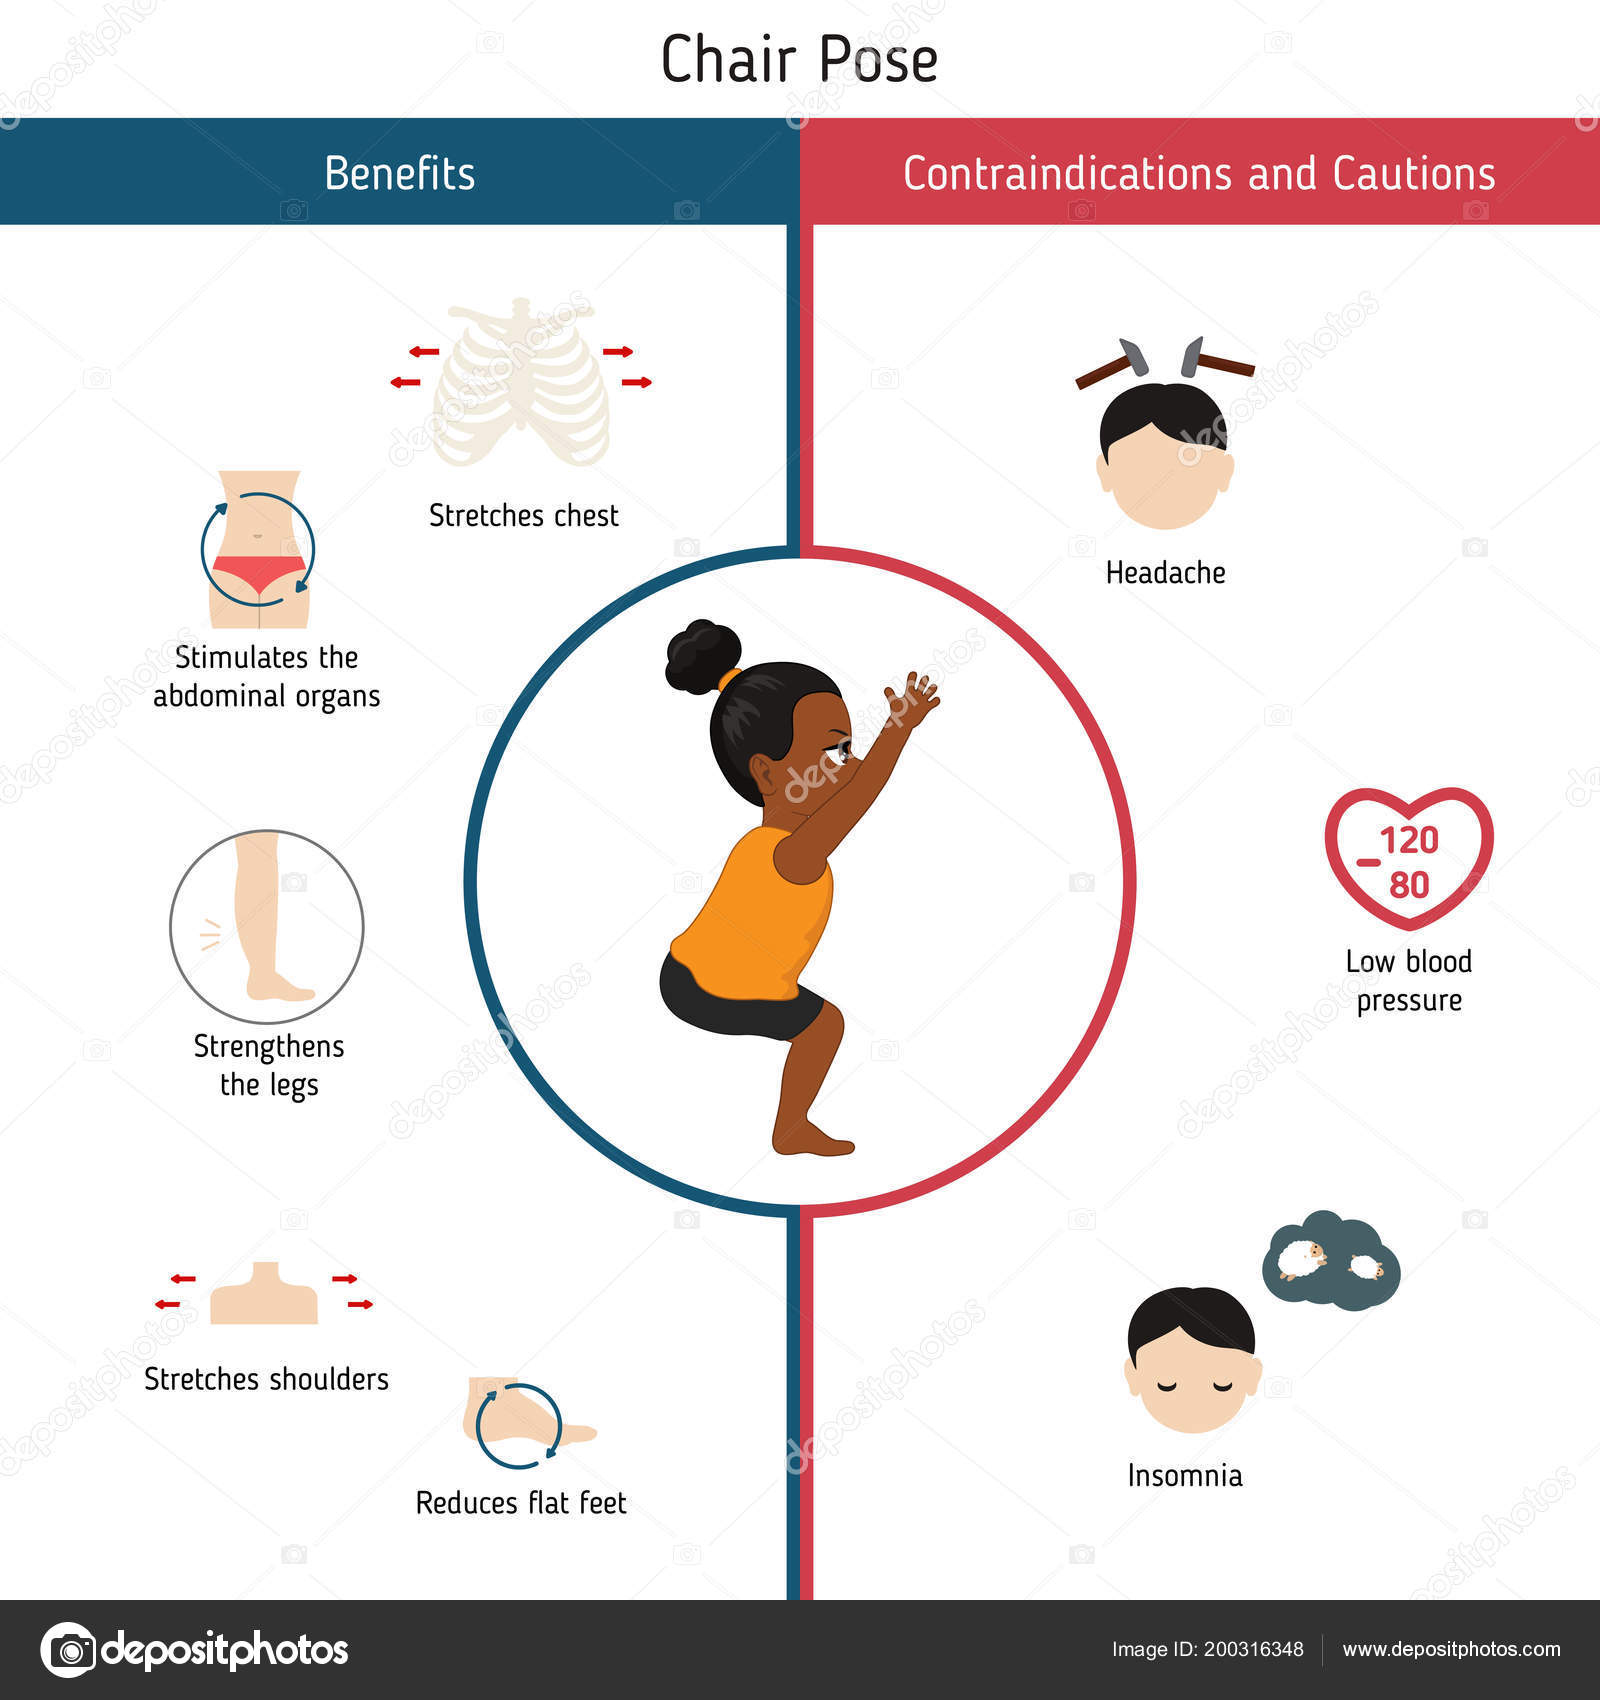 chair yoga benefits